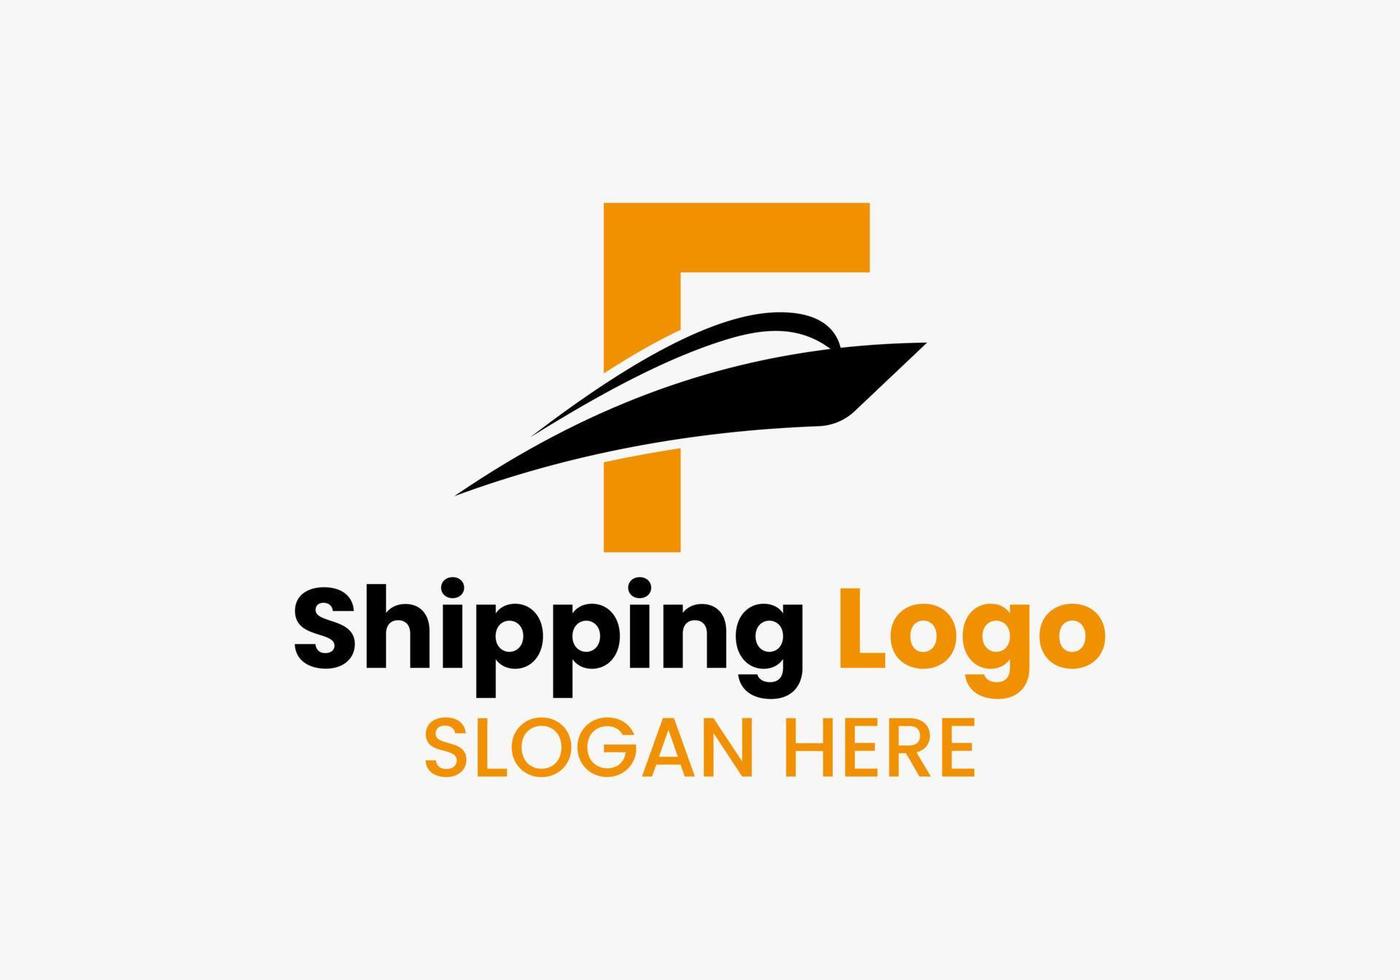 símbolo de veleiro de logotipo de remessa de letra f. ícone de barco à vela de navio náutico vetor